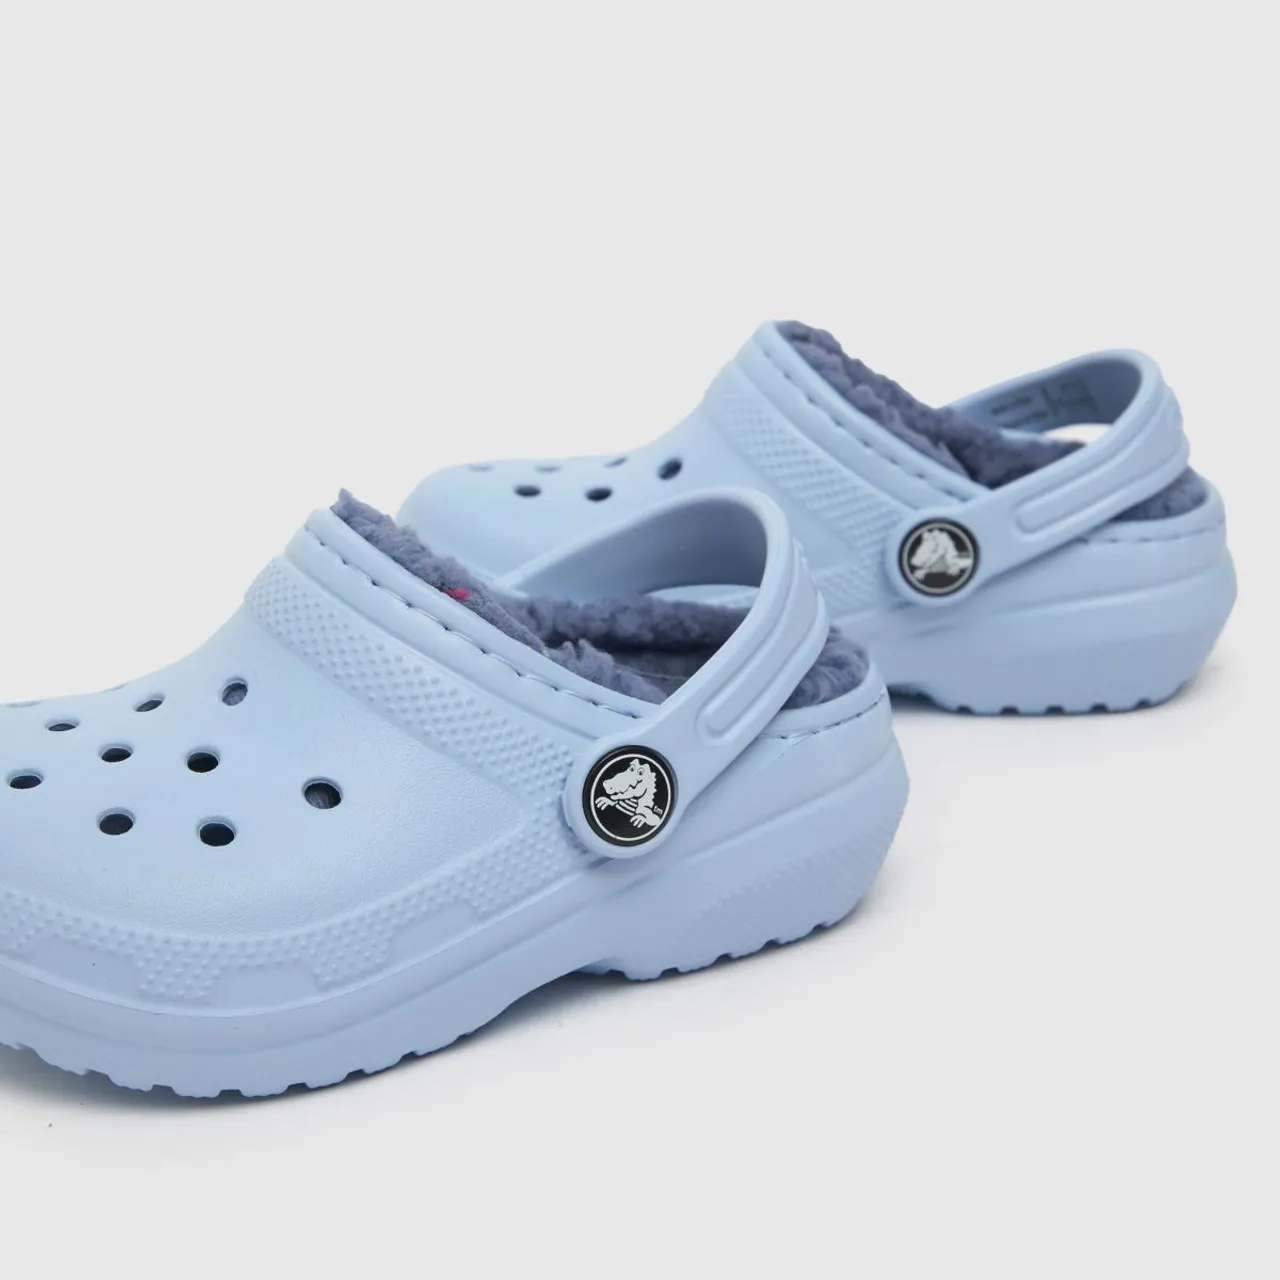 Crocs Pale Blue Classic Lined Clog Toddler Sandals